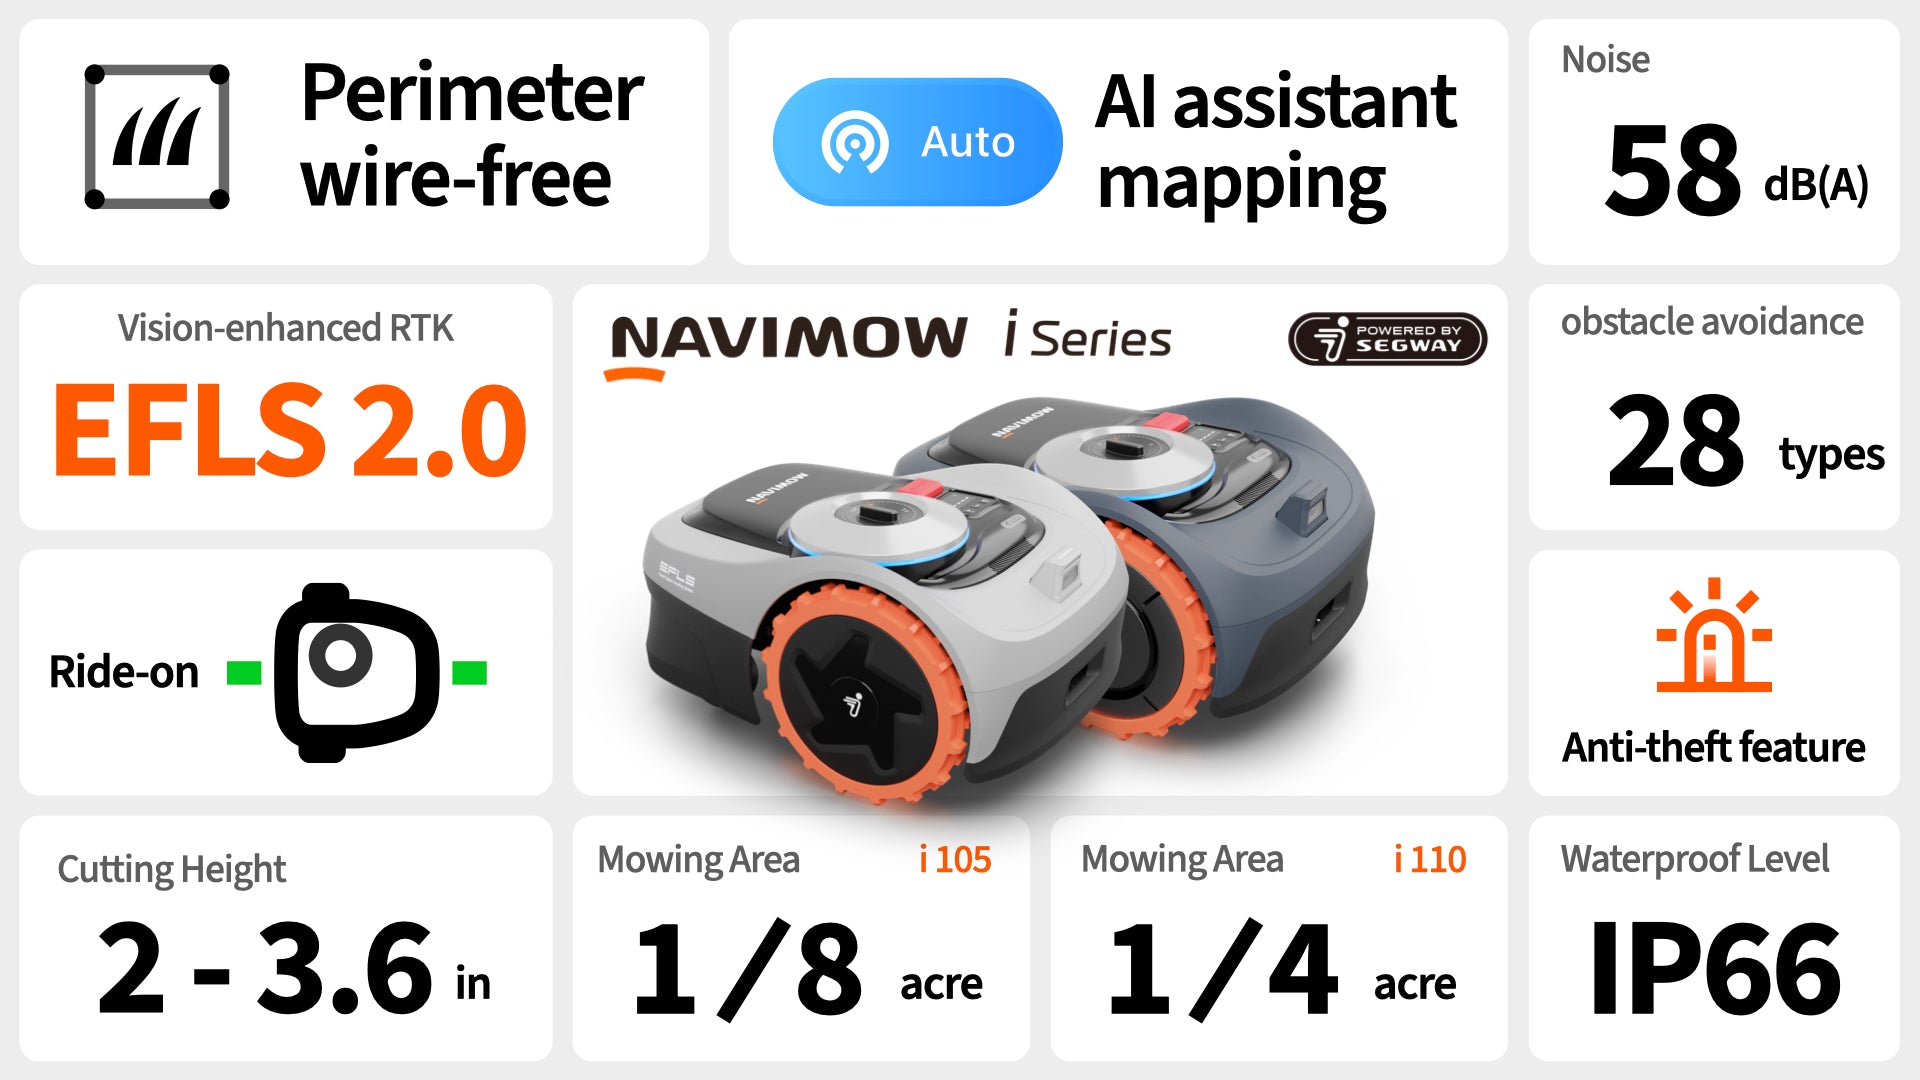 Segway Navimow i Series Robot Mower